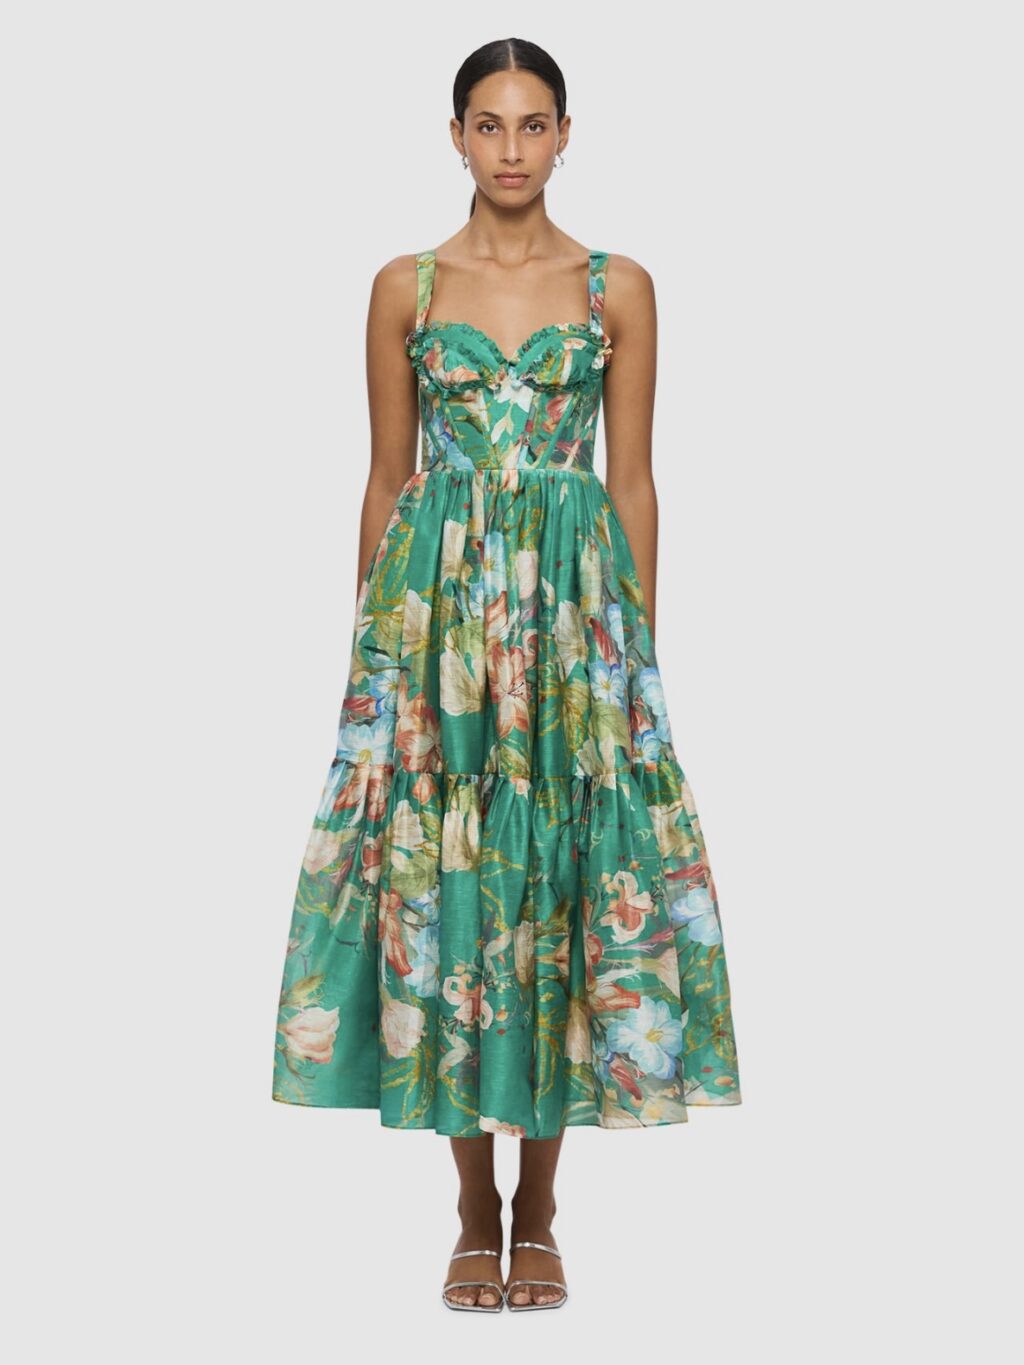 Leo Lin Rose Bustier Midi Dress. Sweetheart neckline green garden party midi dress.